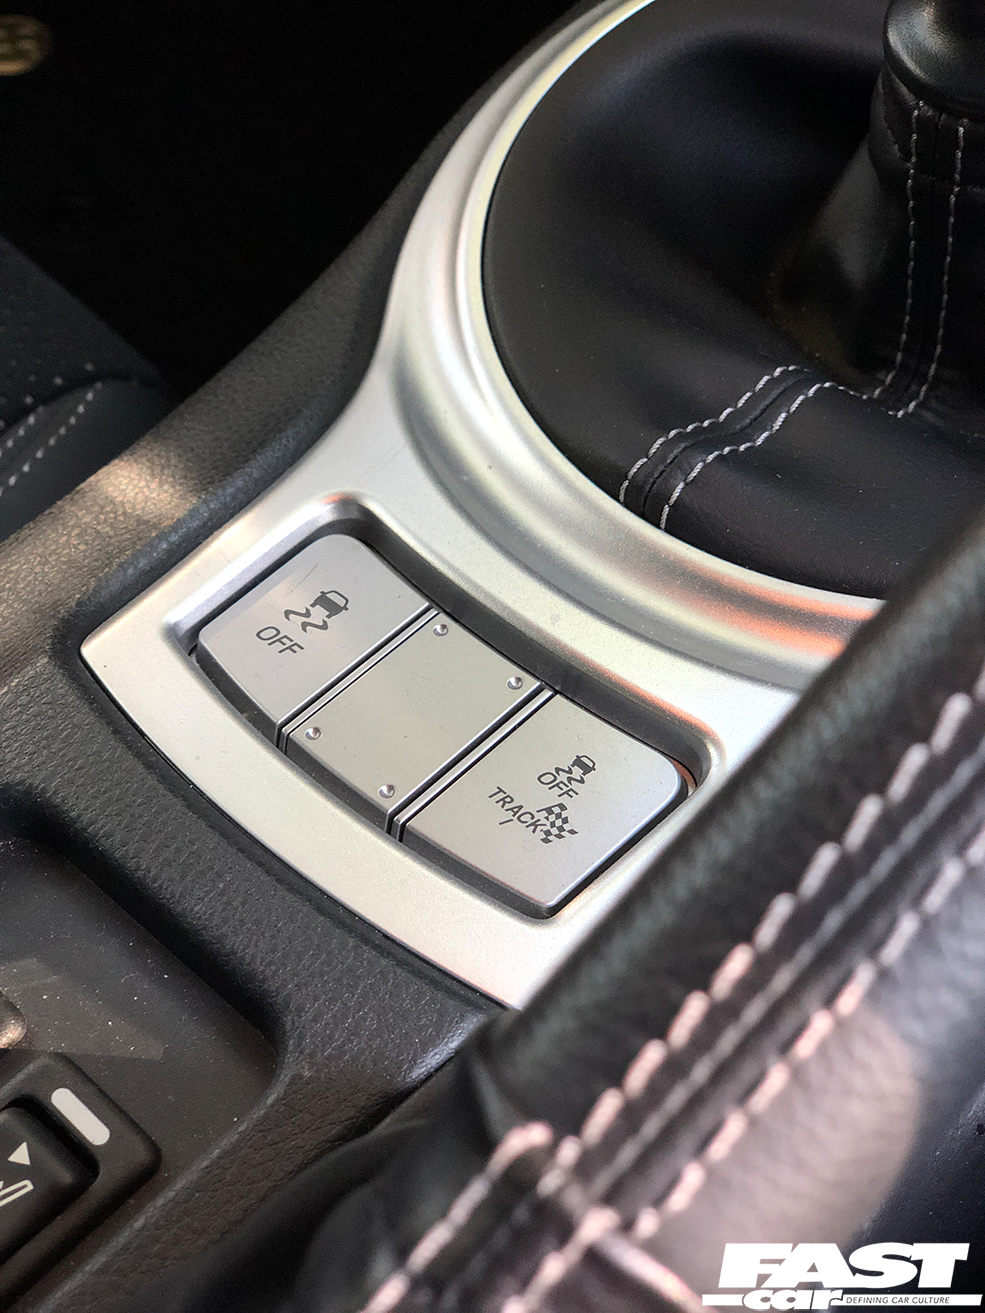 Toyota GT86 Interior close-up